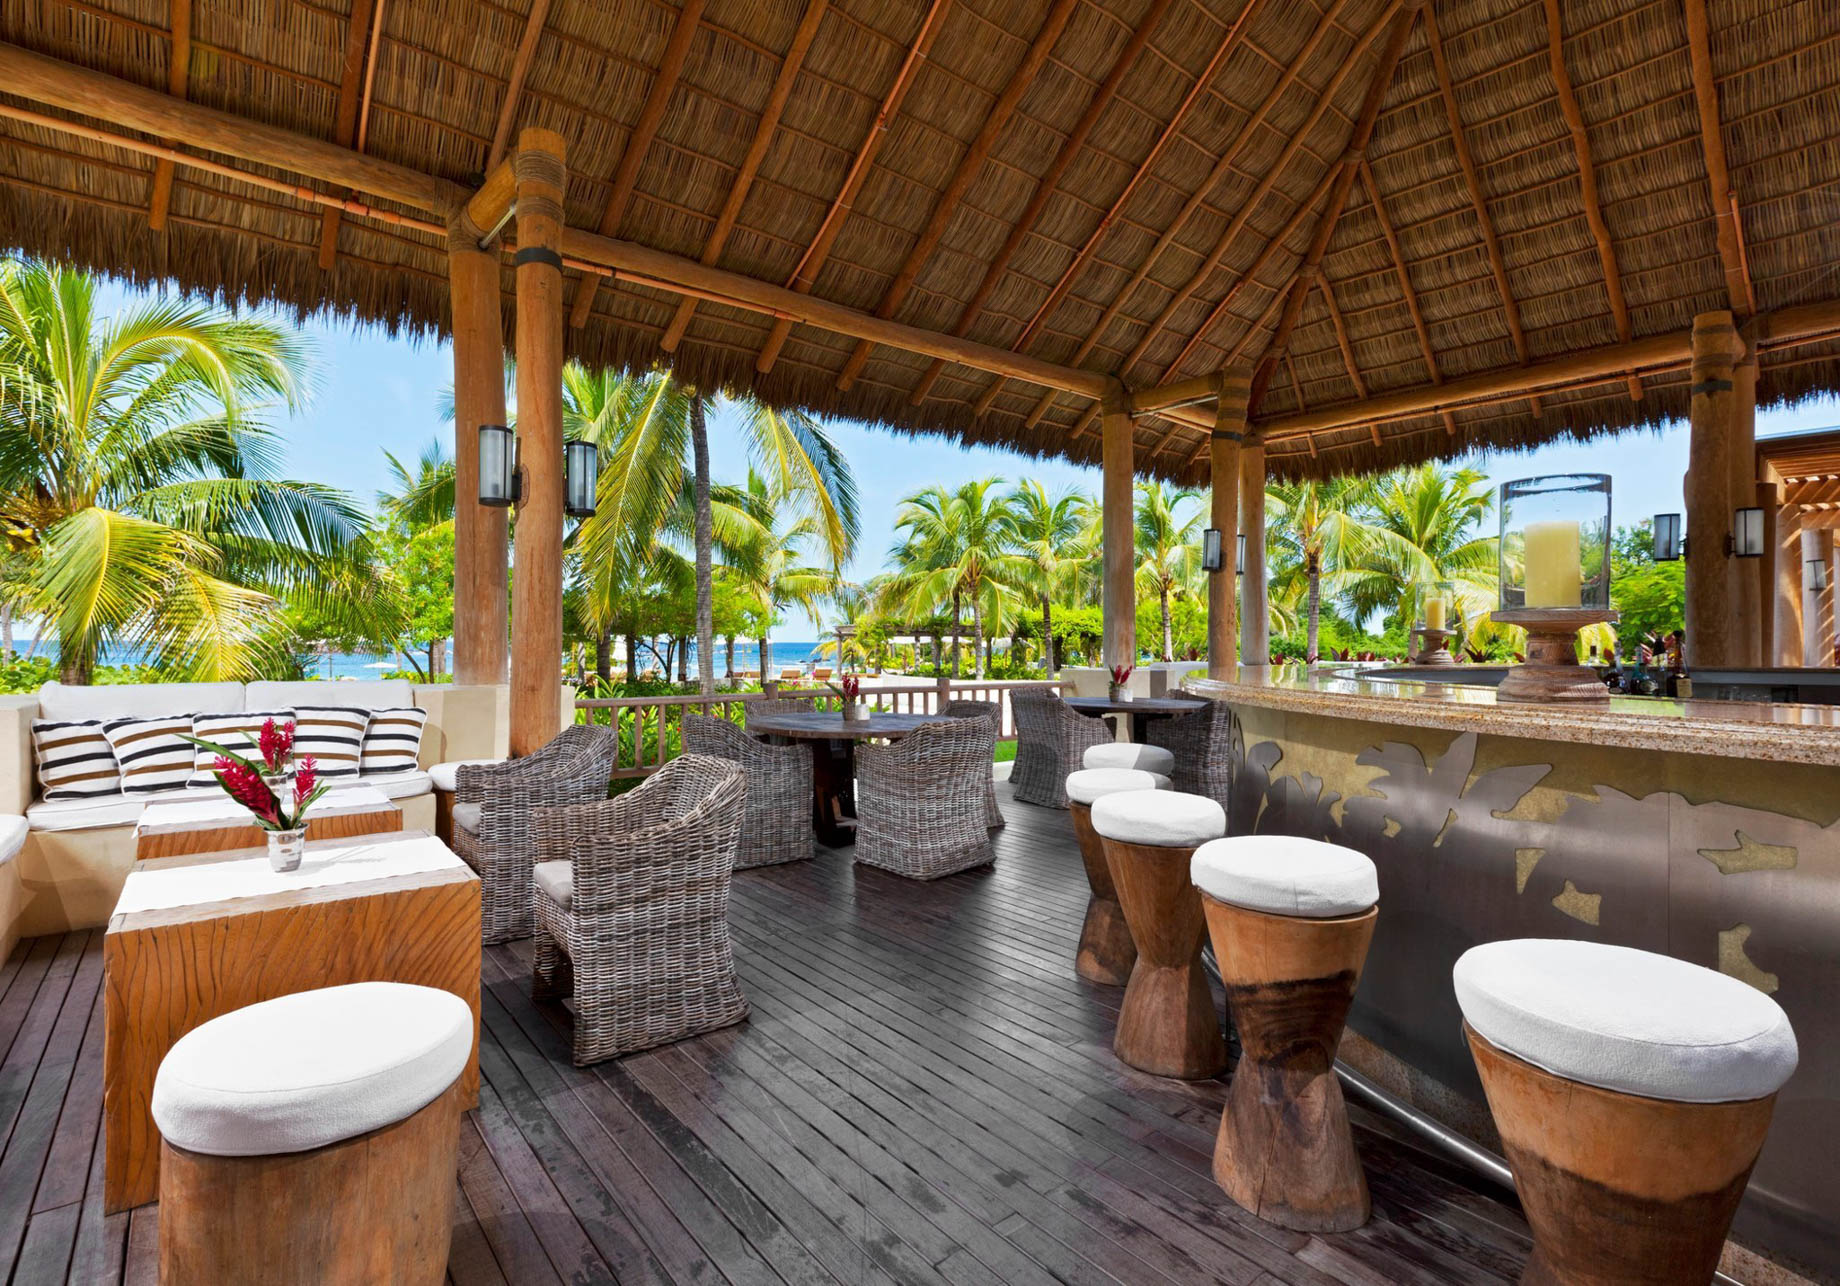 The St. Regis Punta Mita Resort - Nayarit, Mexico - Sea Breeze Bar